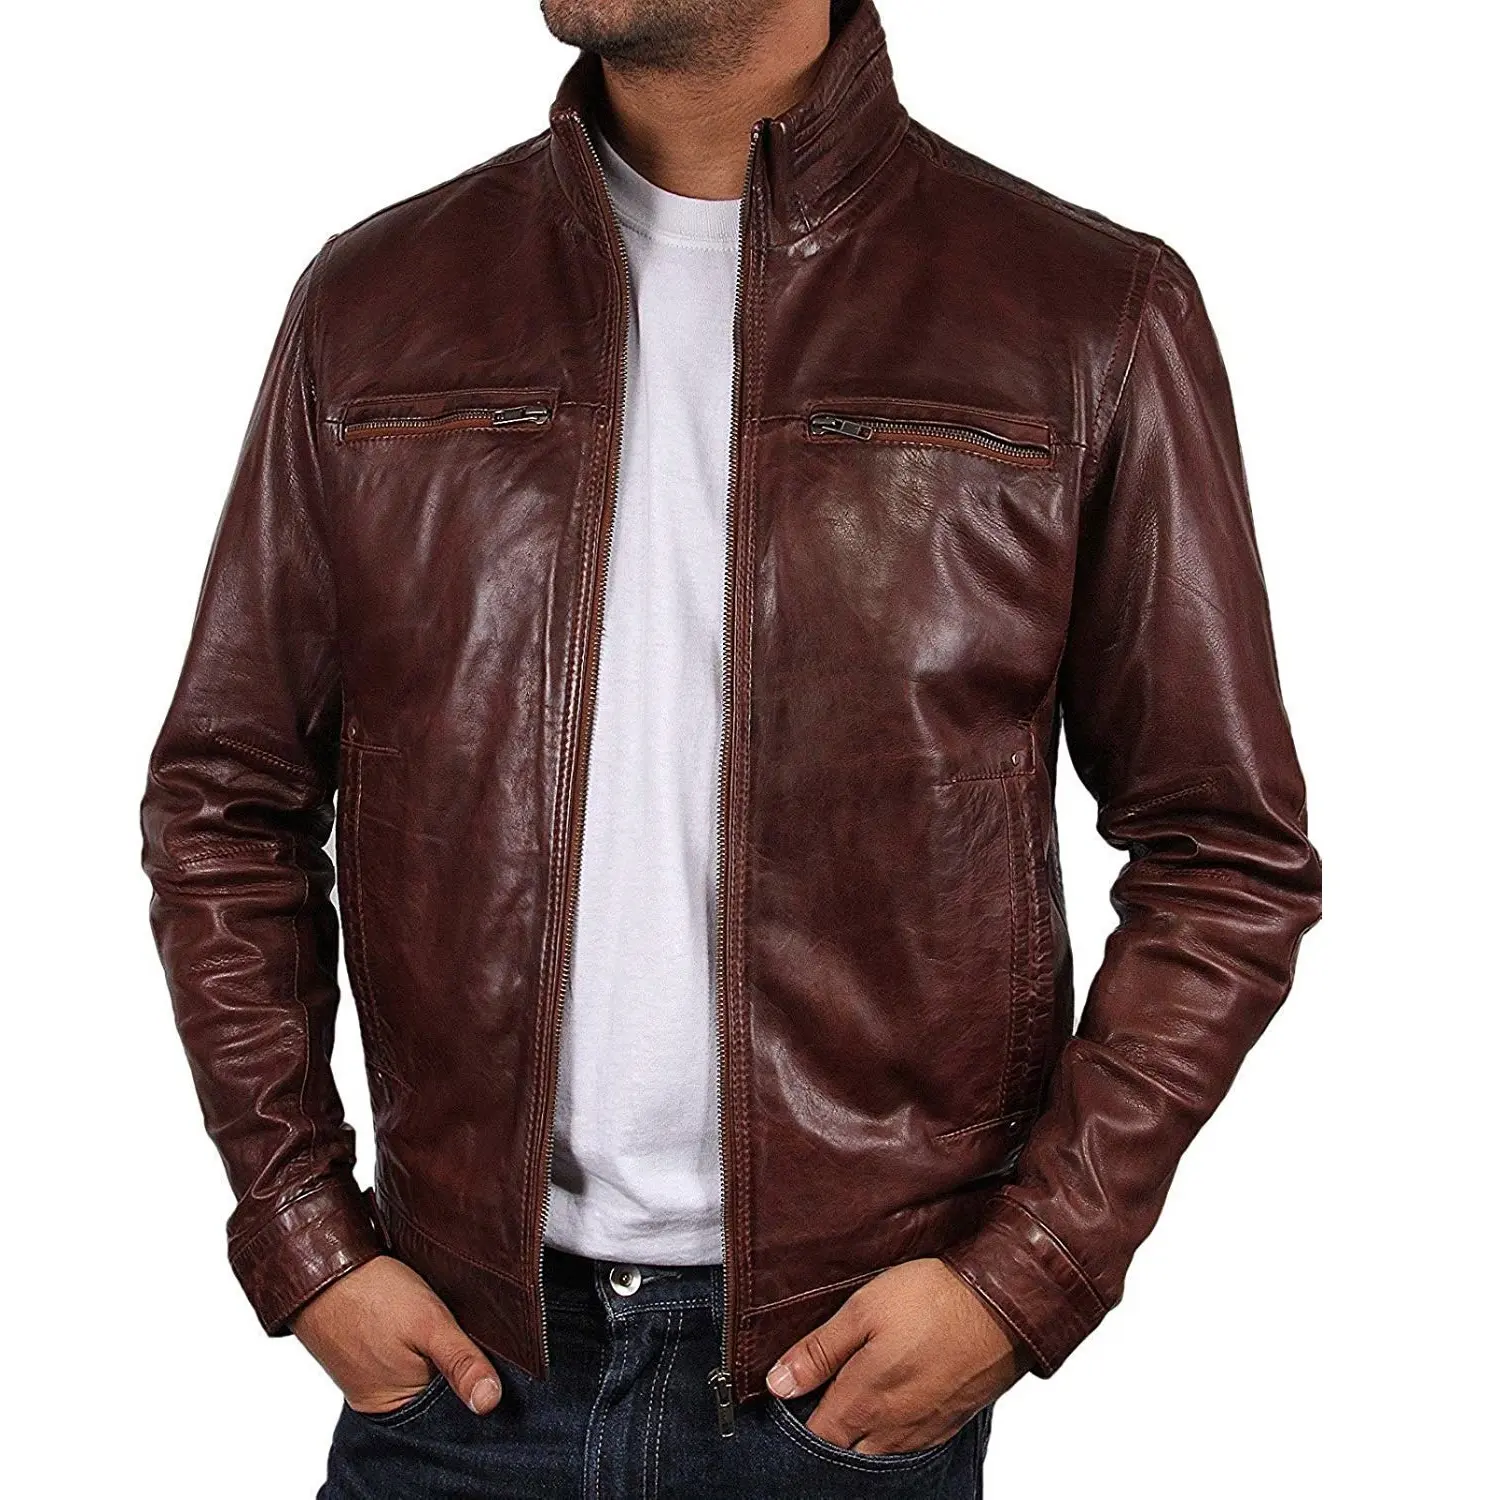 Sensational Leather Jacket High Street Fashion Leather Jacket Winter Wear Outdoor For Men Plus Size Men's Jackets